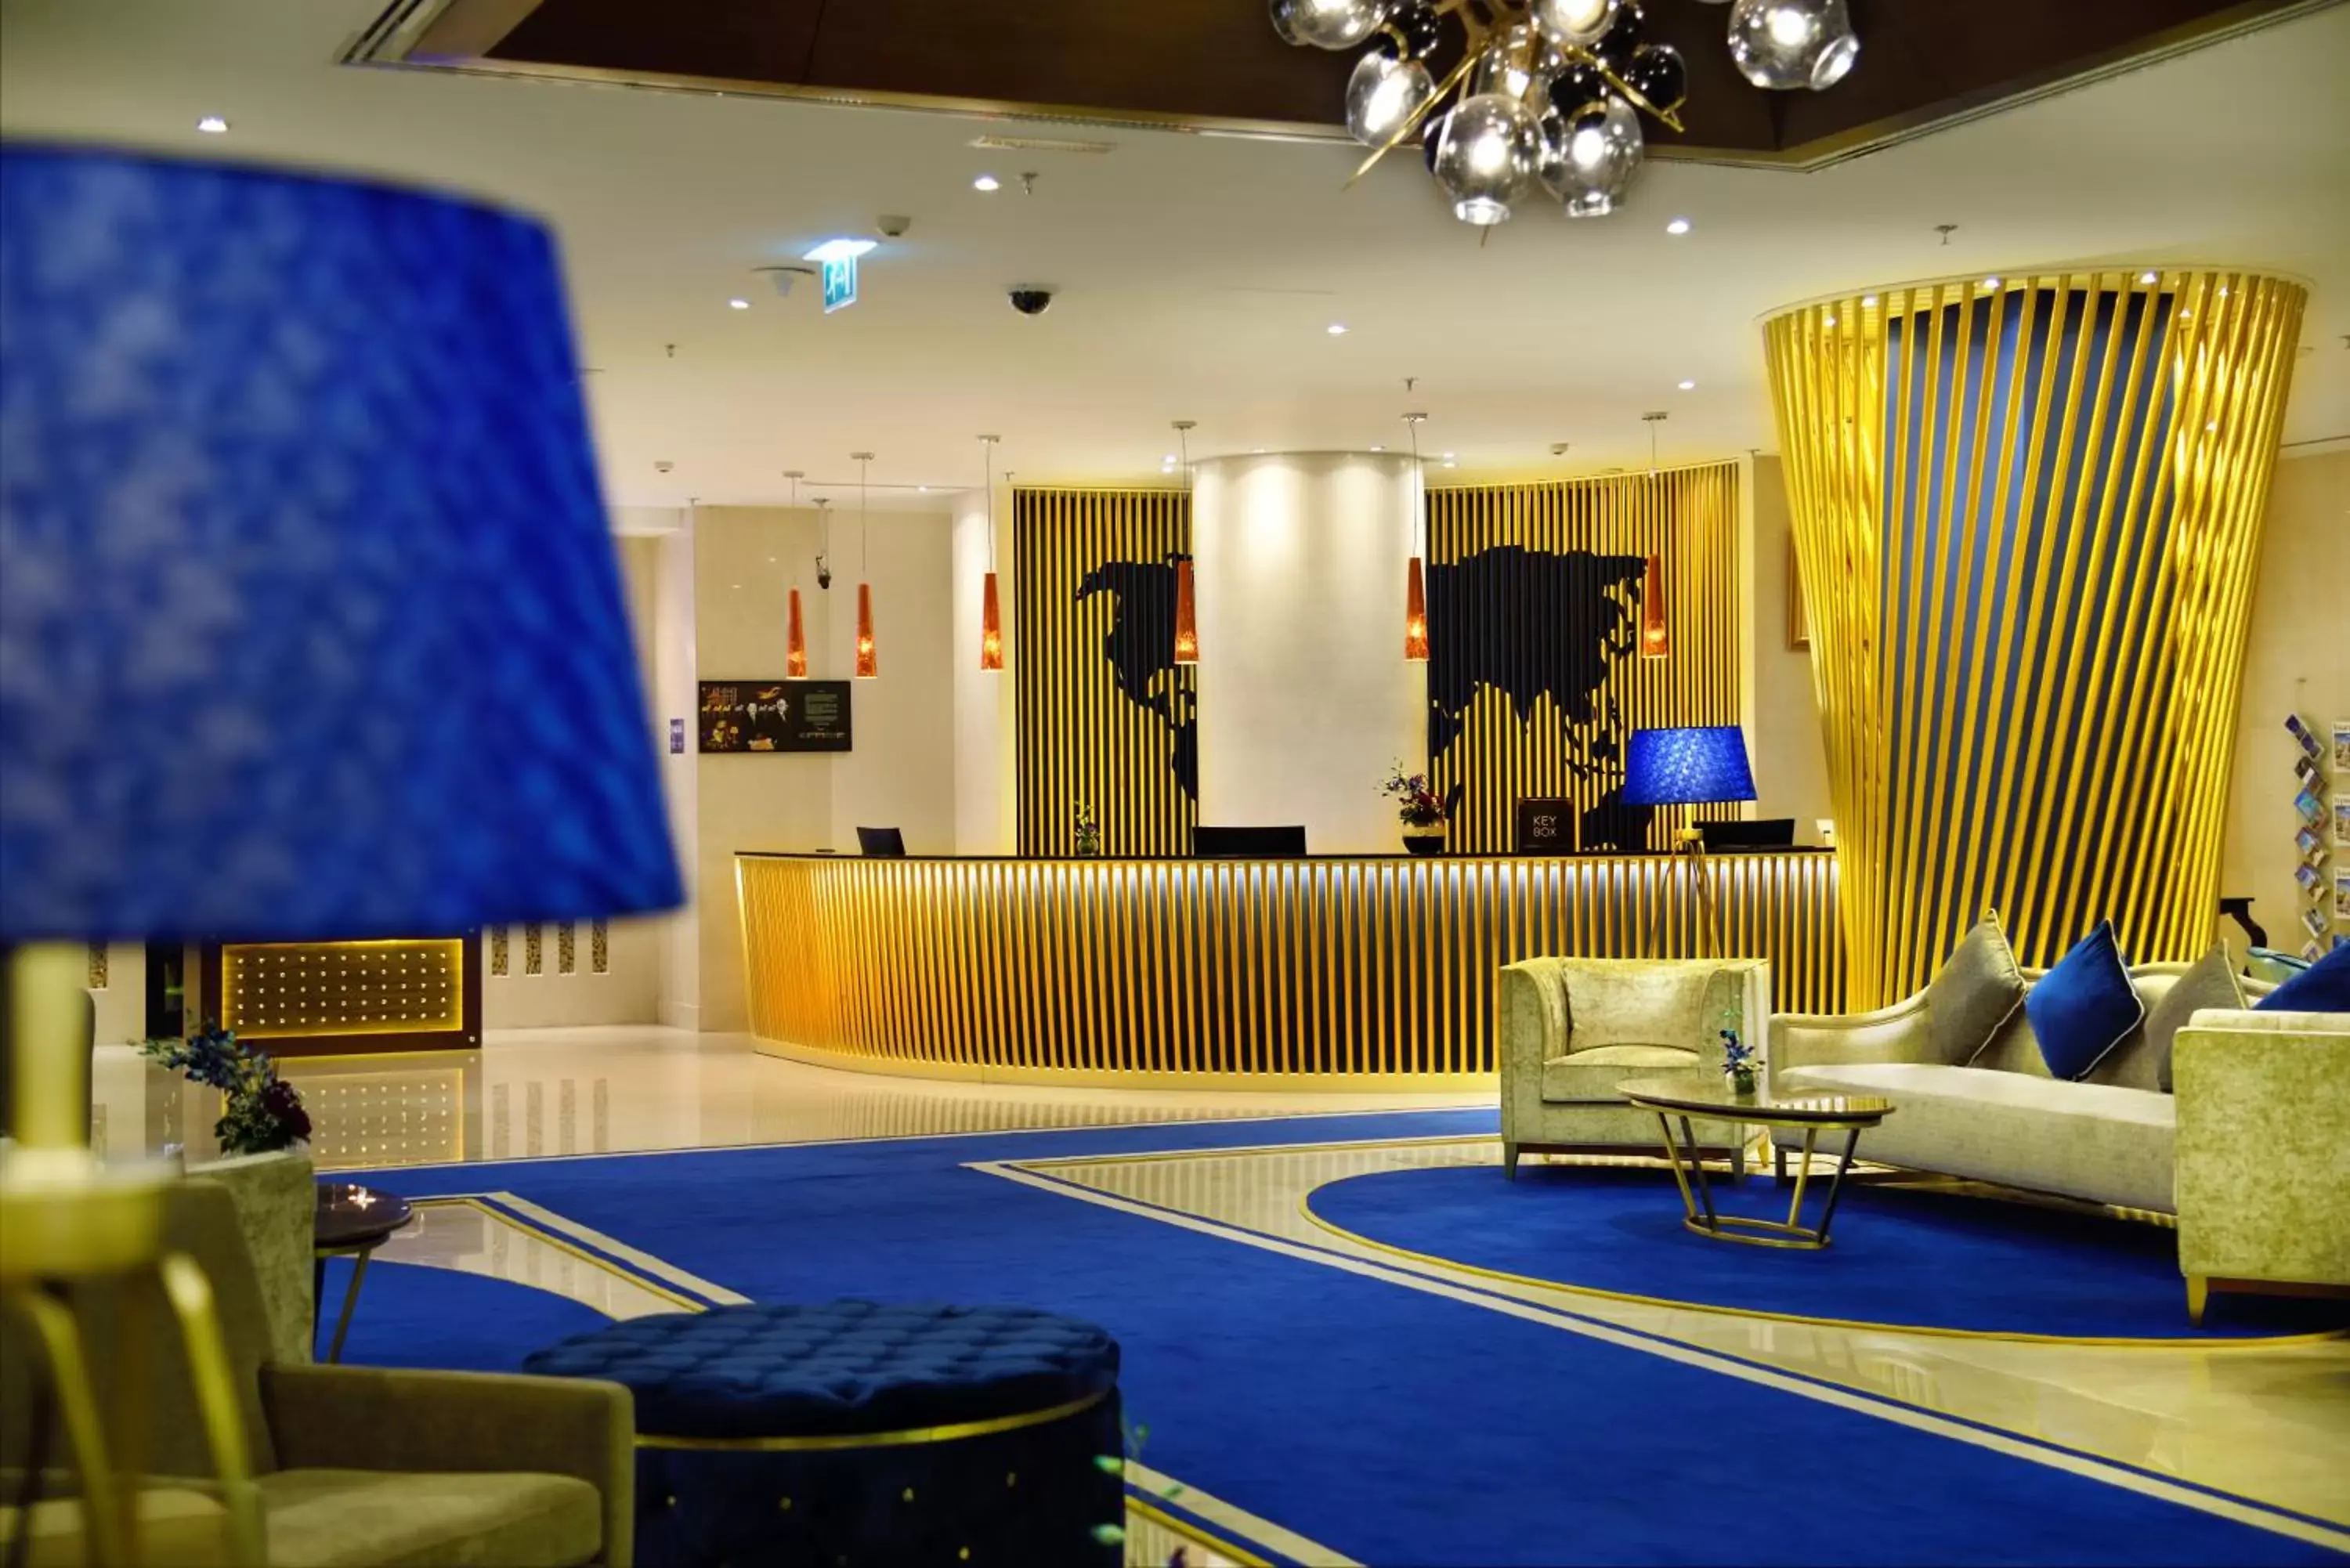 Lobby or reception in Mercure Gold Hotel, Jumeirah, Dubai